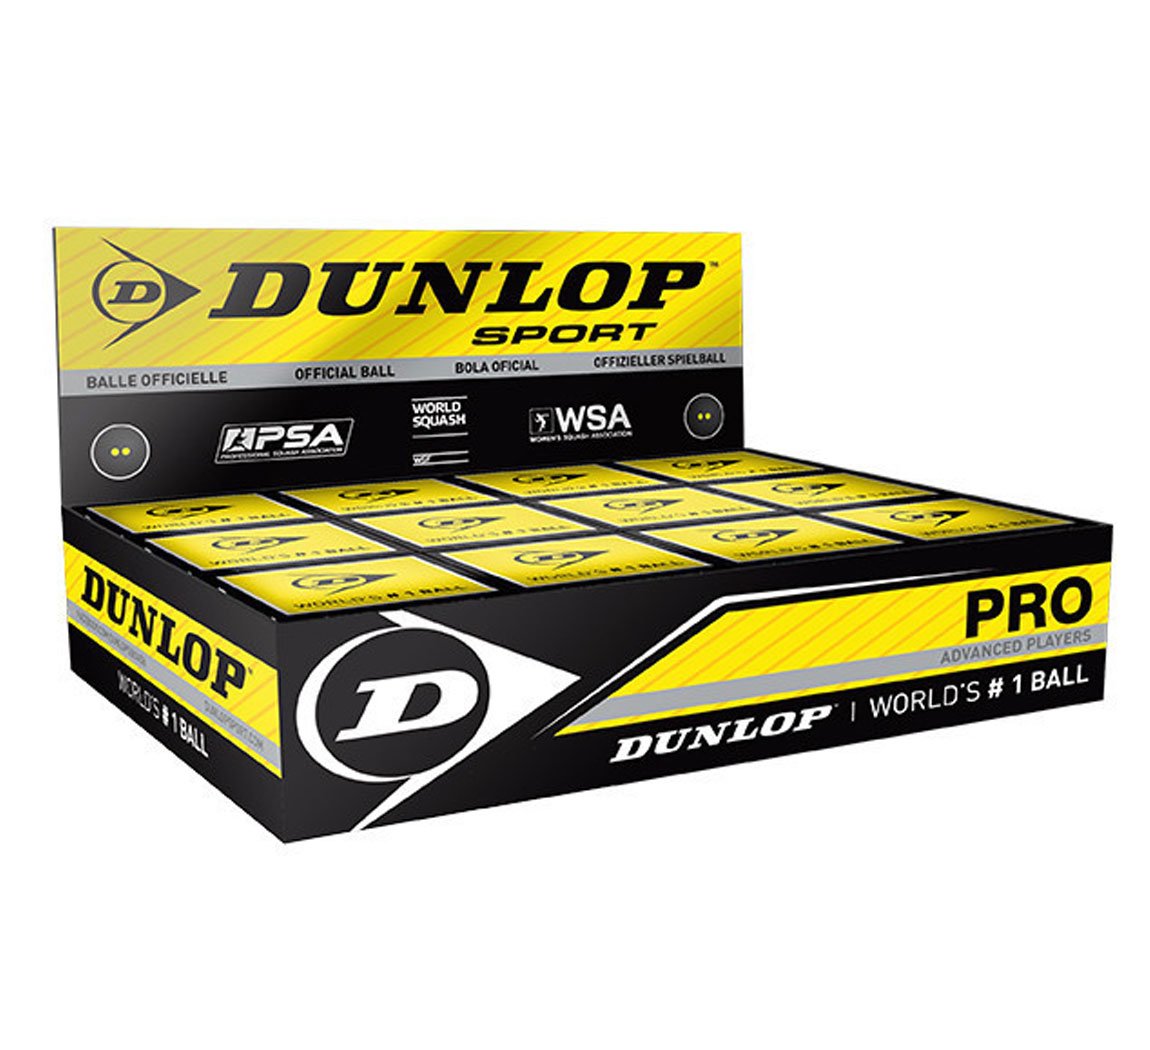 Dunlop Pro Double Dot Rubber Squash Ball, Pack of 12 (Black) - Best Price online Prokicksports.com